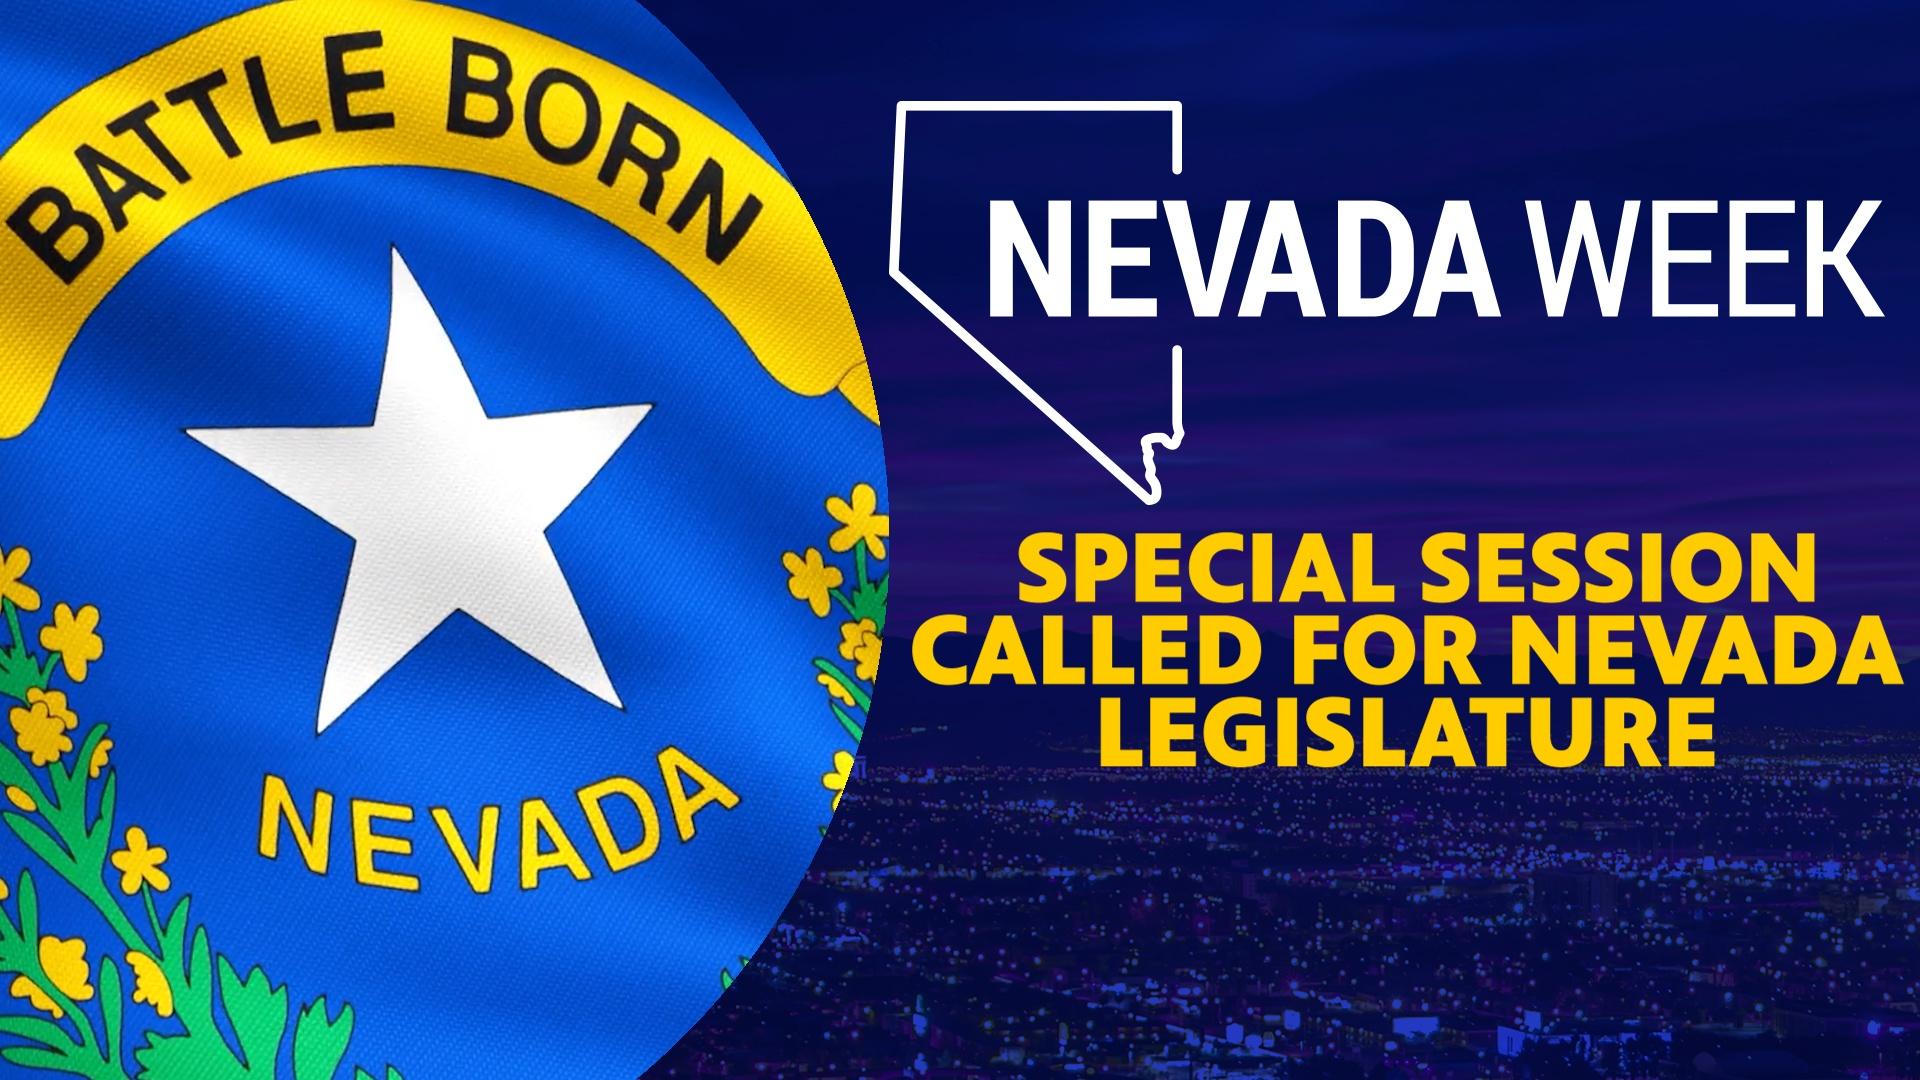 Special Sessions called for Nevada Legislature